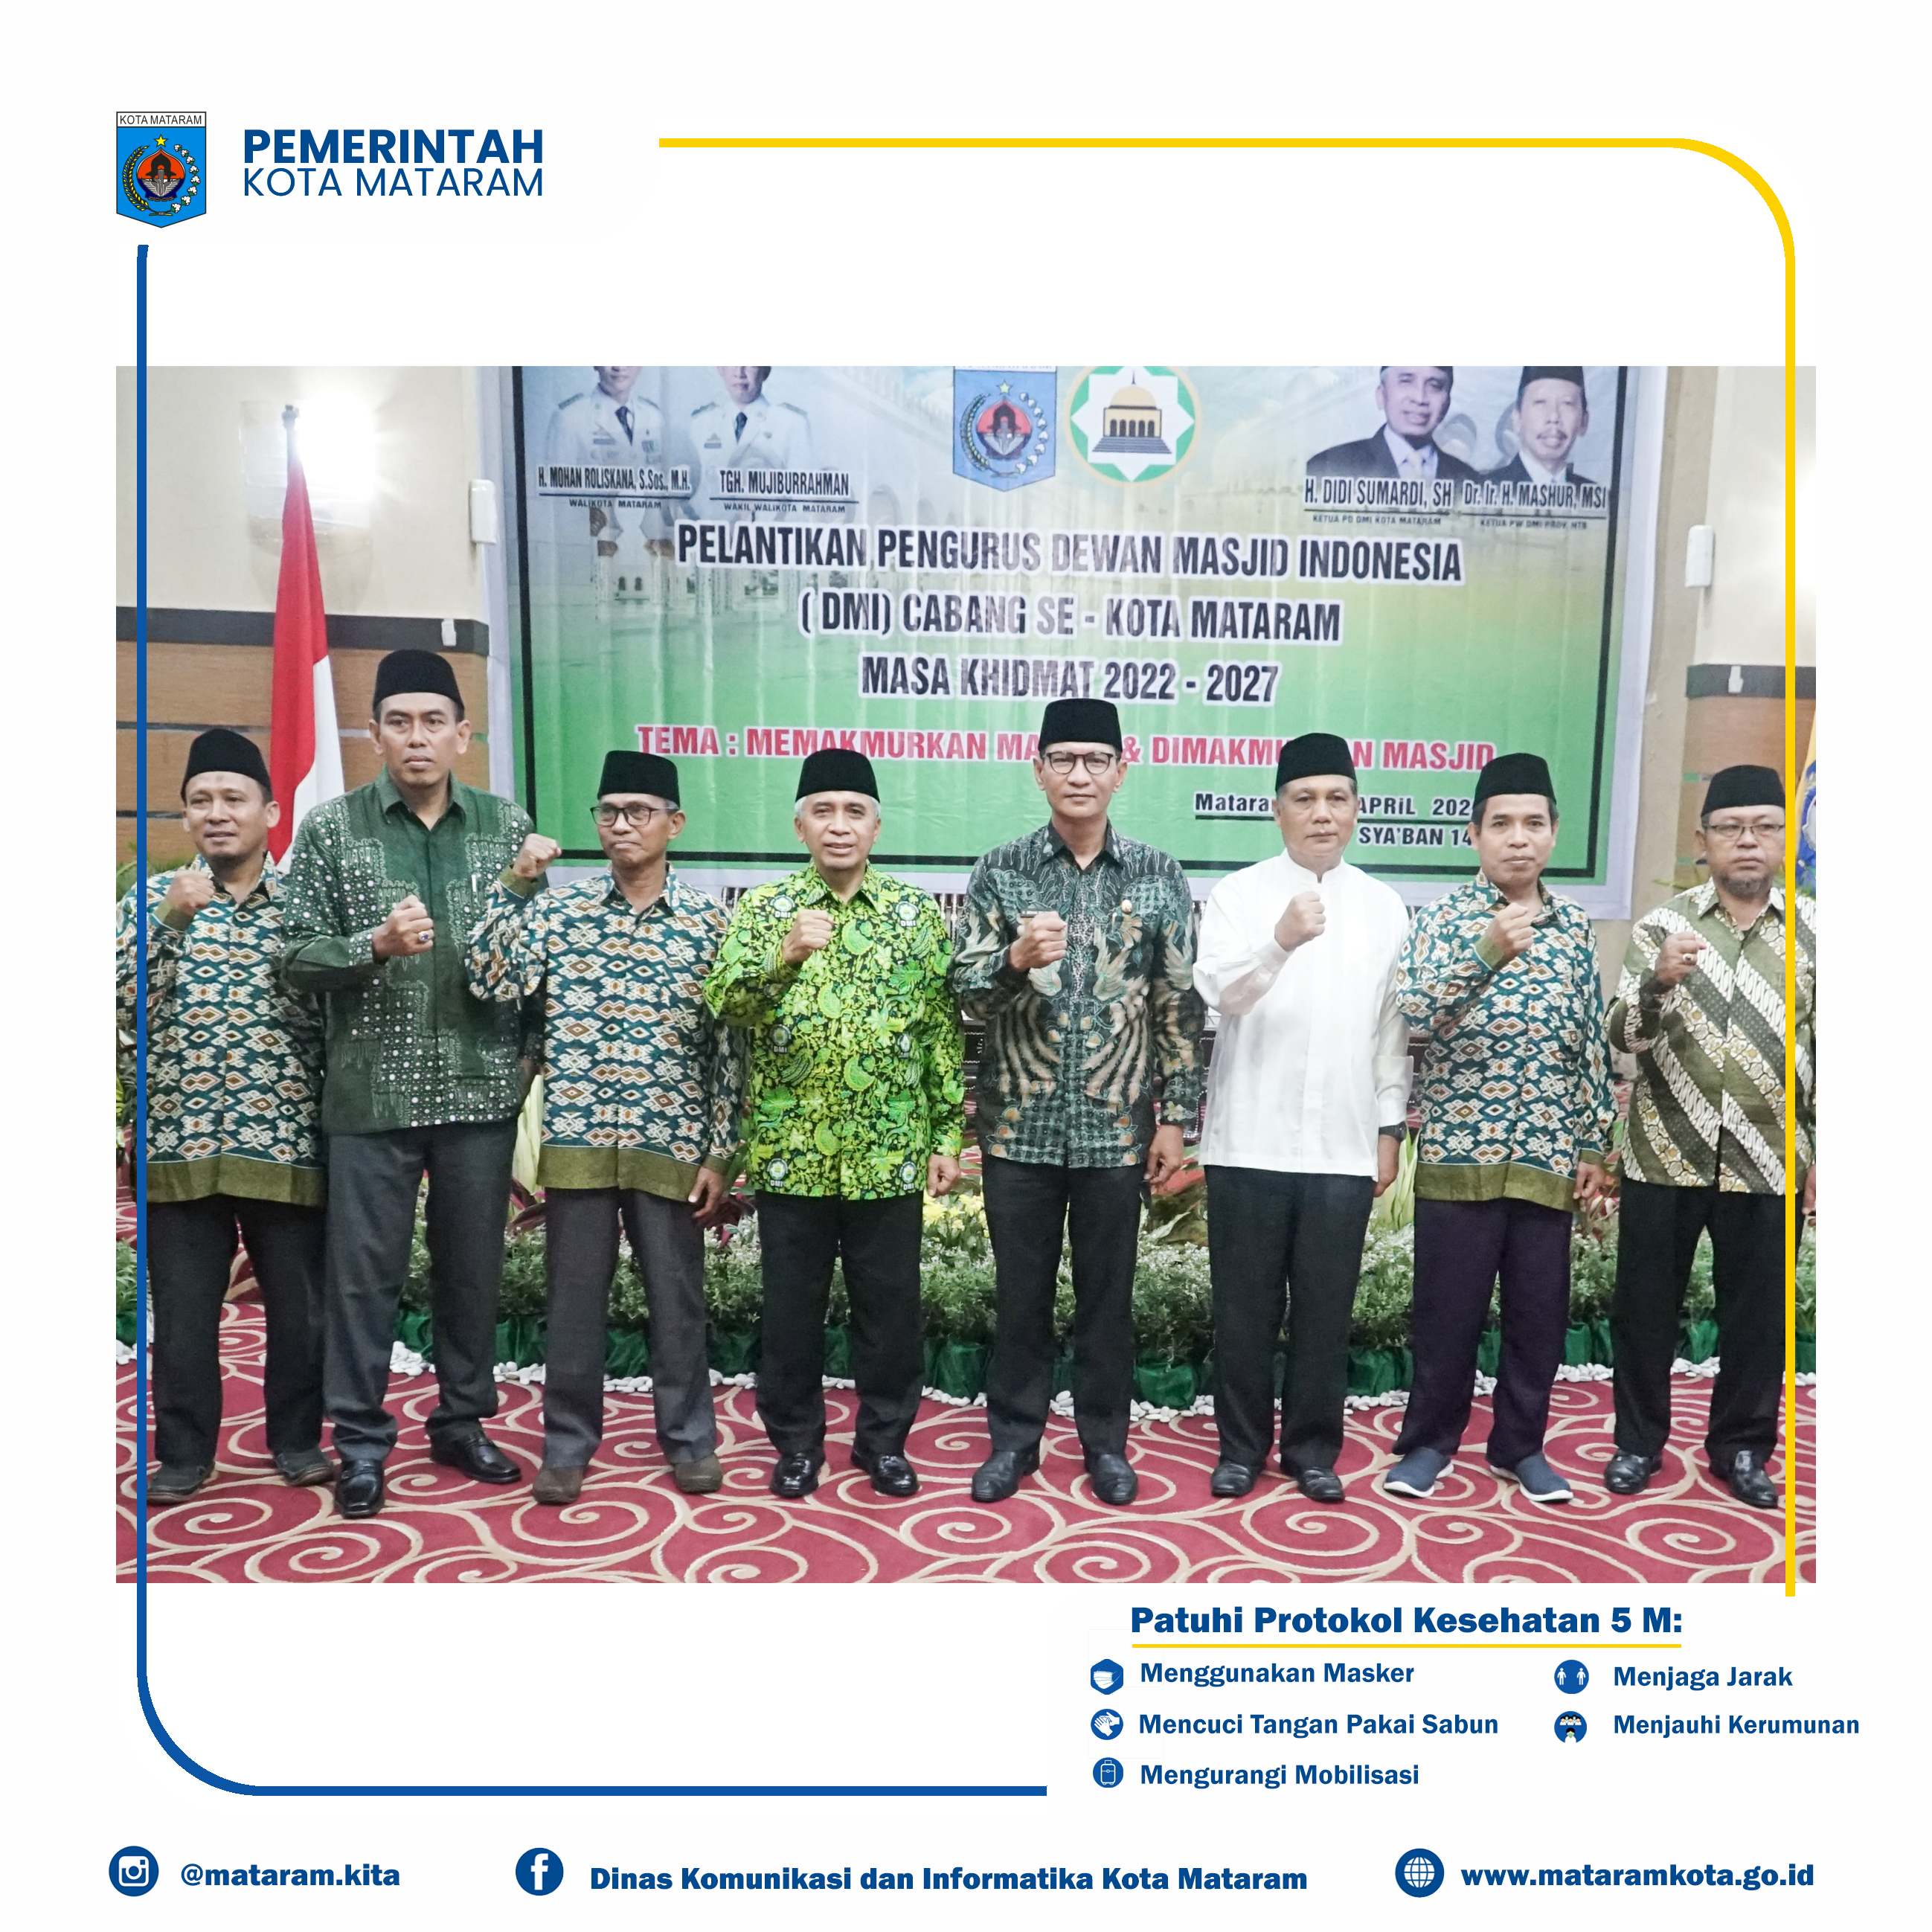 Pelantikan Dewan Masjid Indonesia (DMI) Cabang Se- Kota Mataram